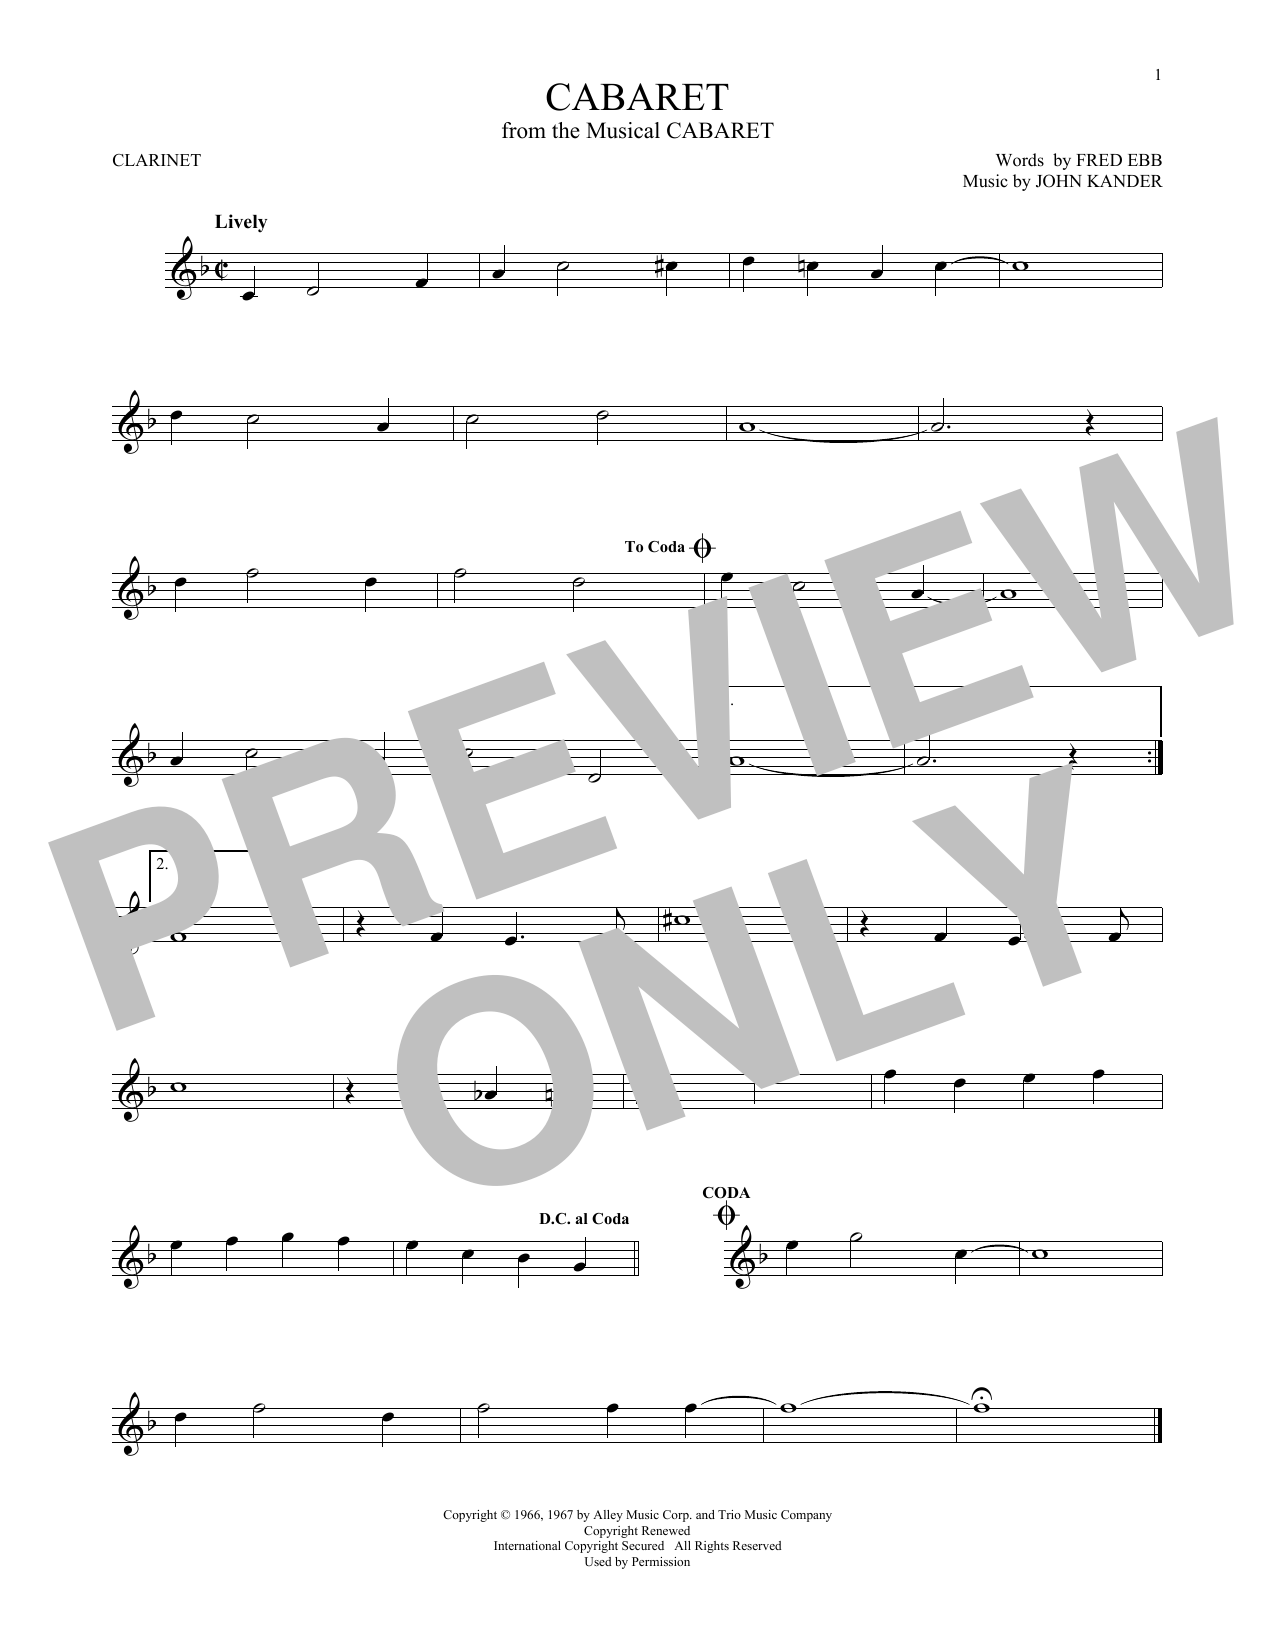 John Kander & Fred Ebb Cabaret Sheet Music Notes & Chords for Tenor Saxophone - Download or Print PDF